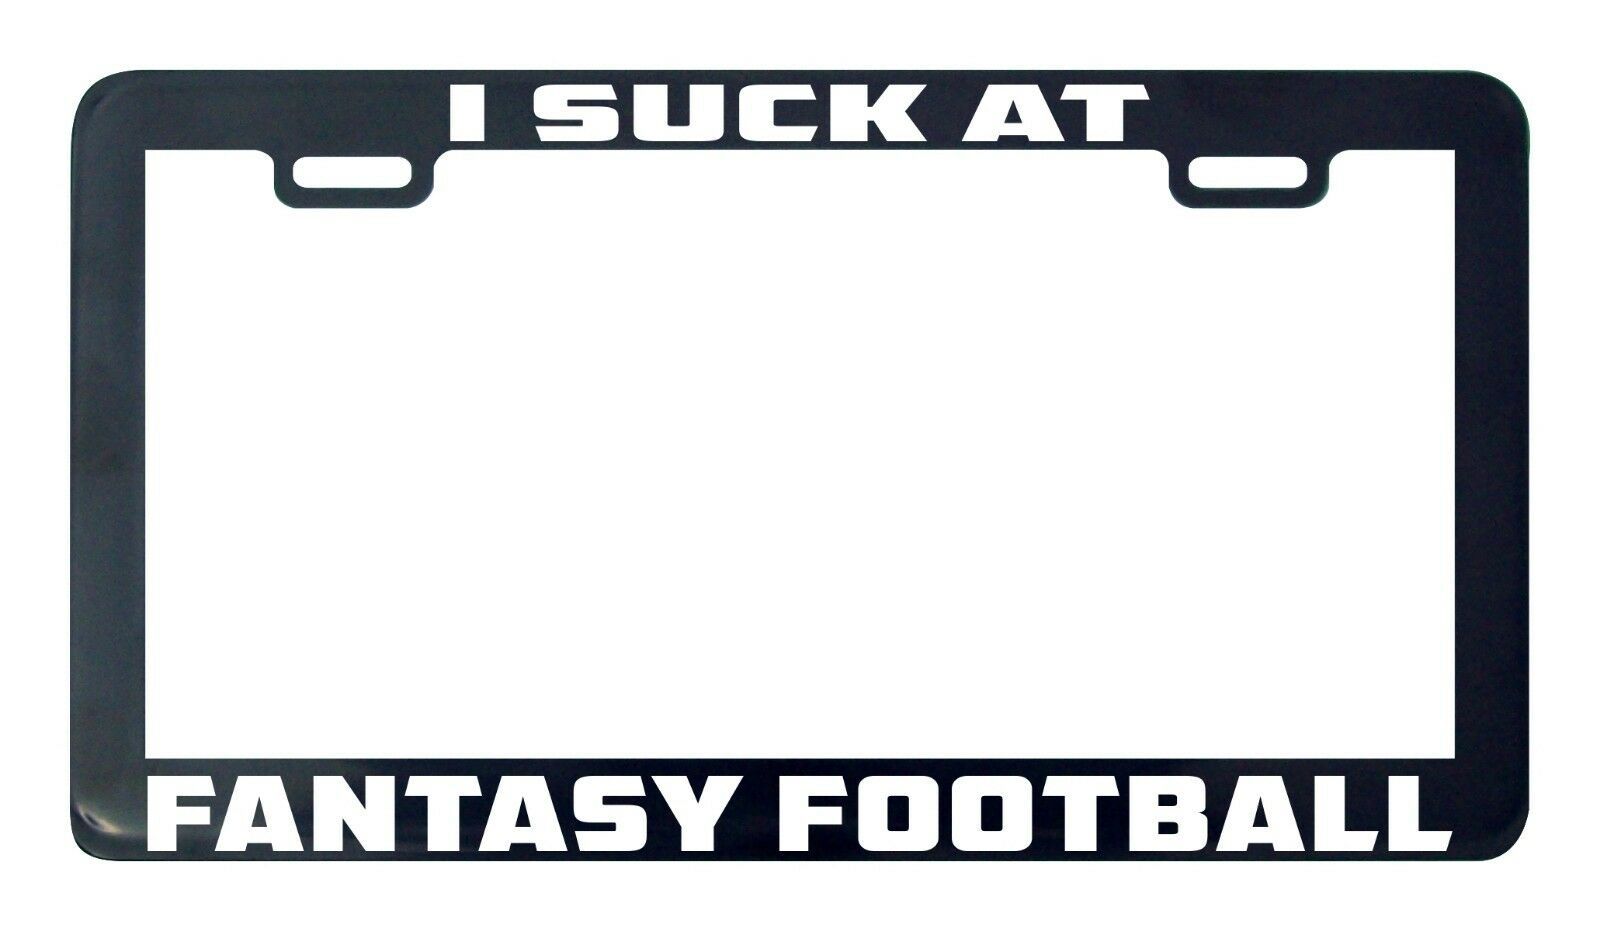 Primary image for Fantasy football I suck at license plate frame holder